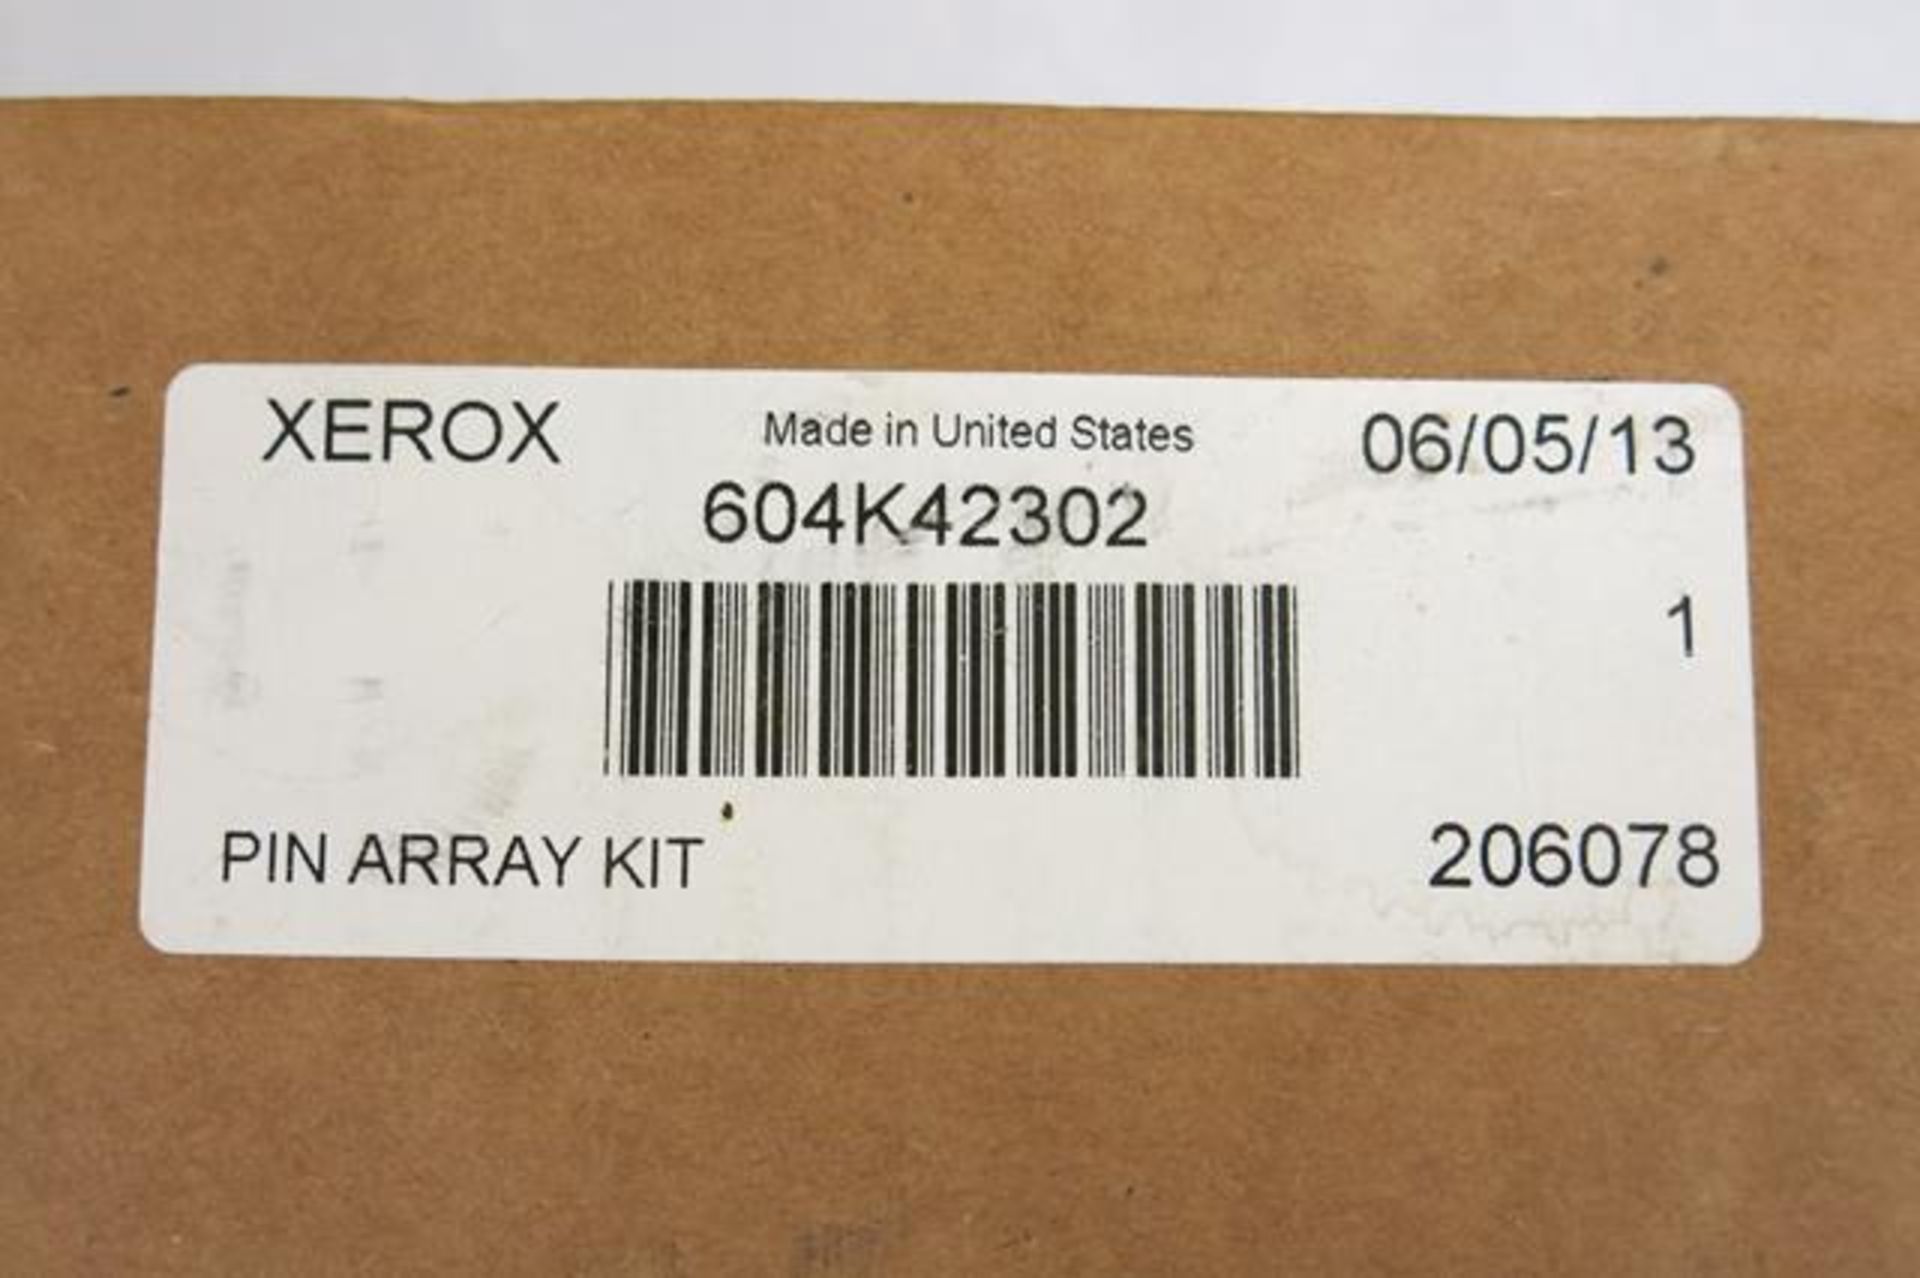 XEROX, 604K42302, PIN ARRAY KIT - Image 2 of 2